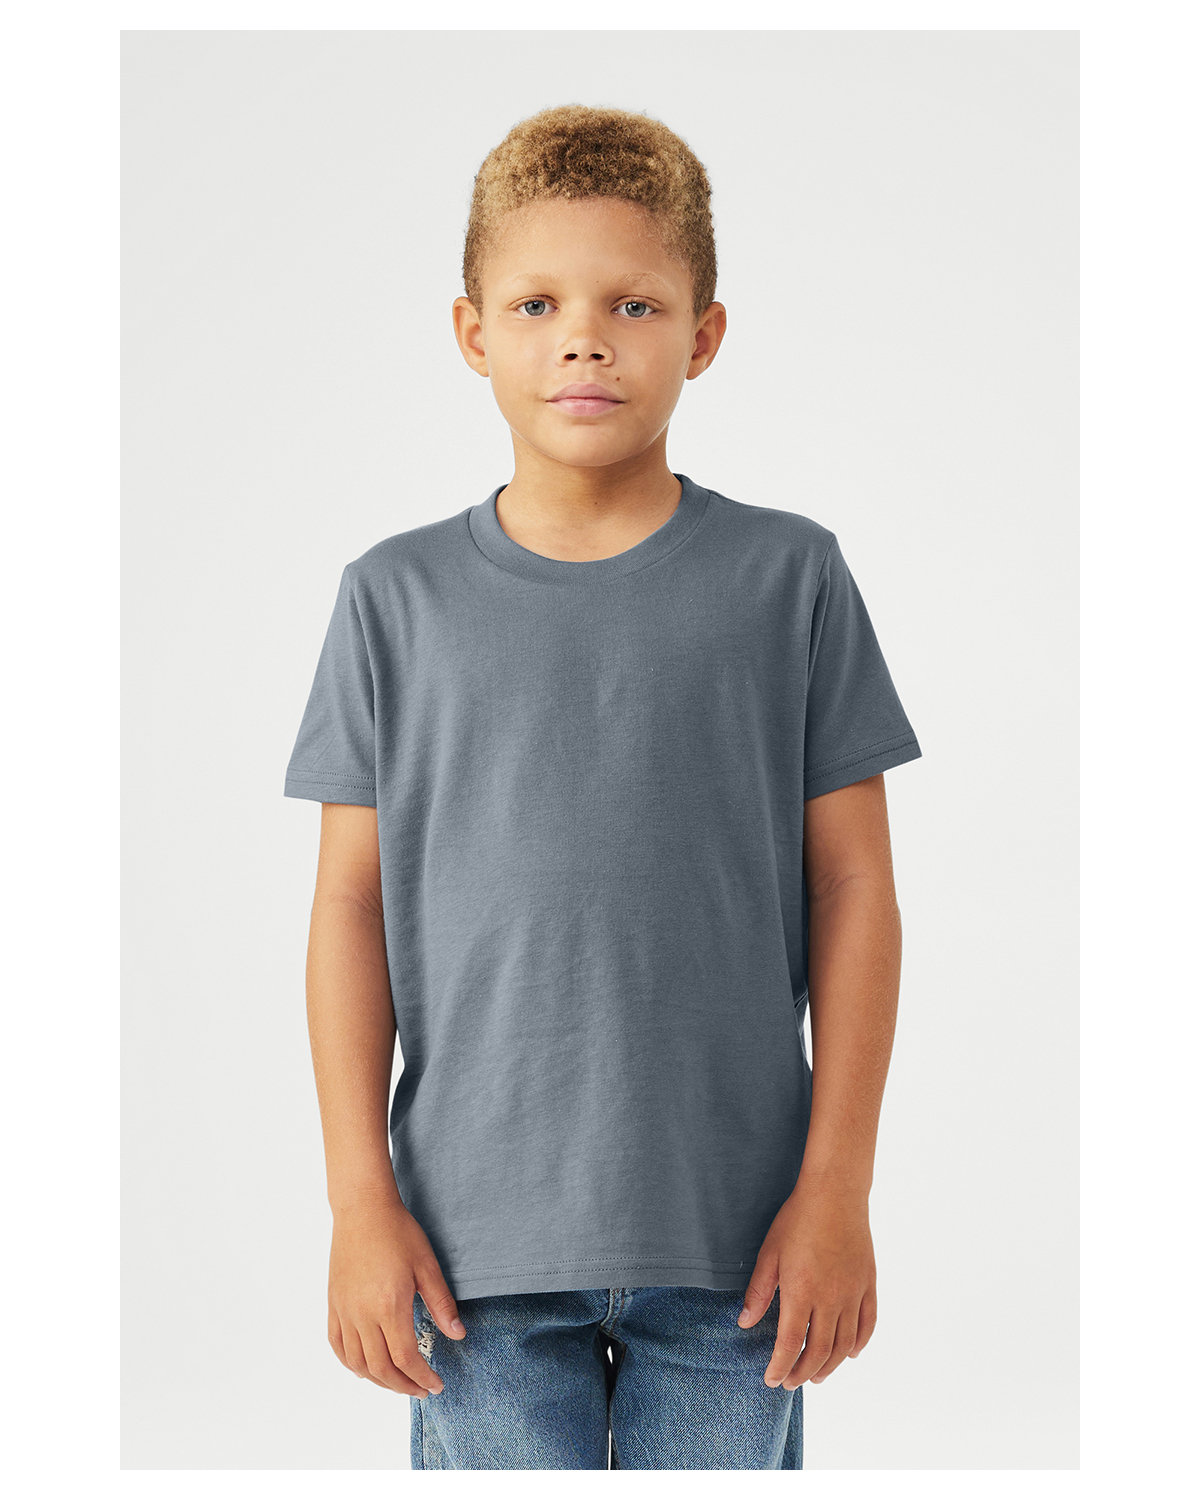 Bella + Canvas Youth Jersey T-Shirt STEEL BLUE 